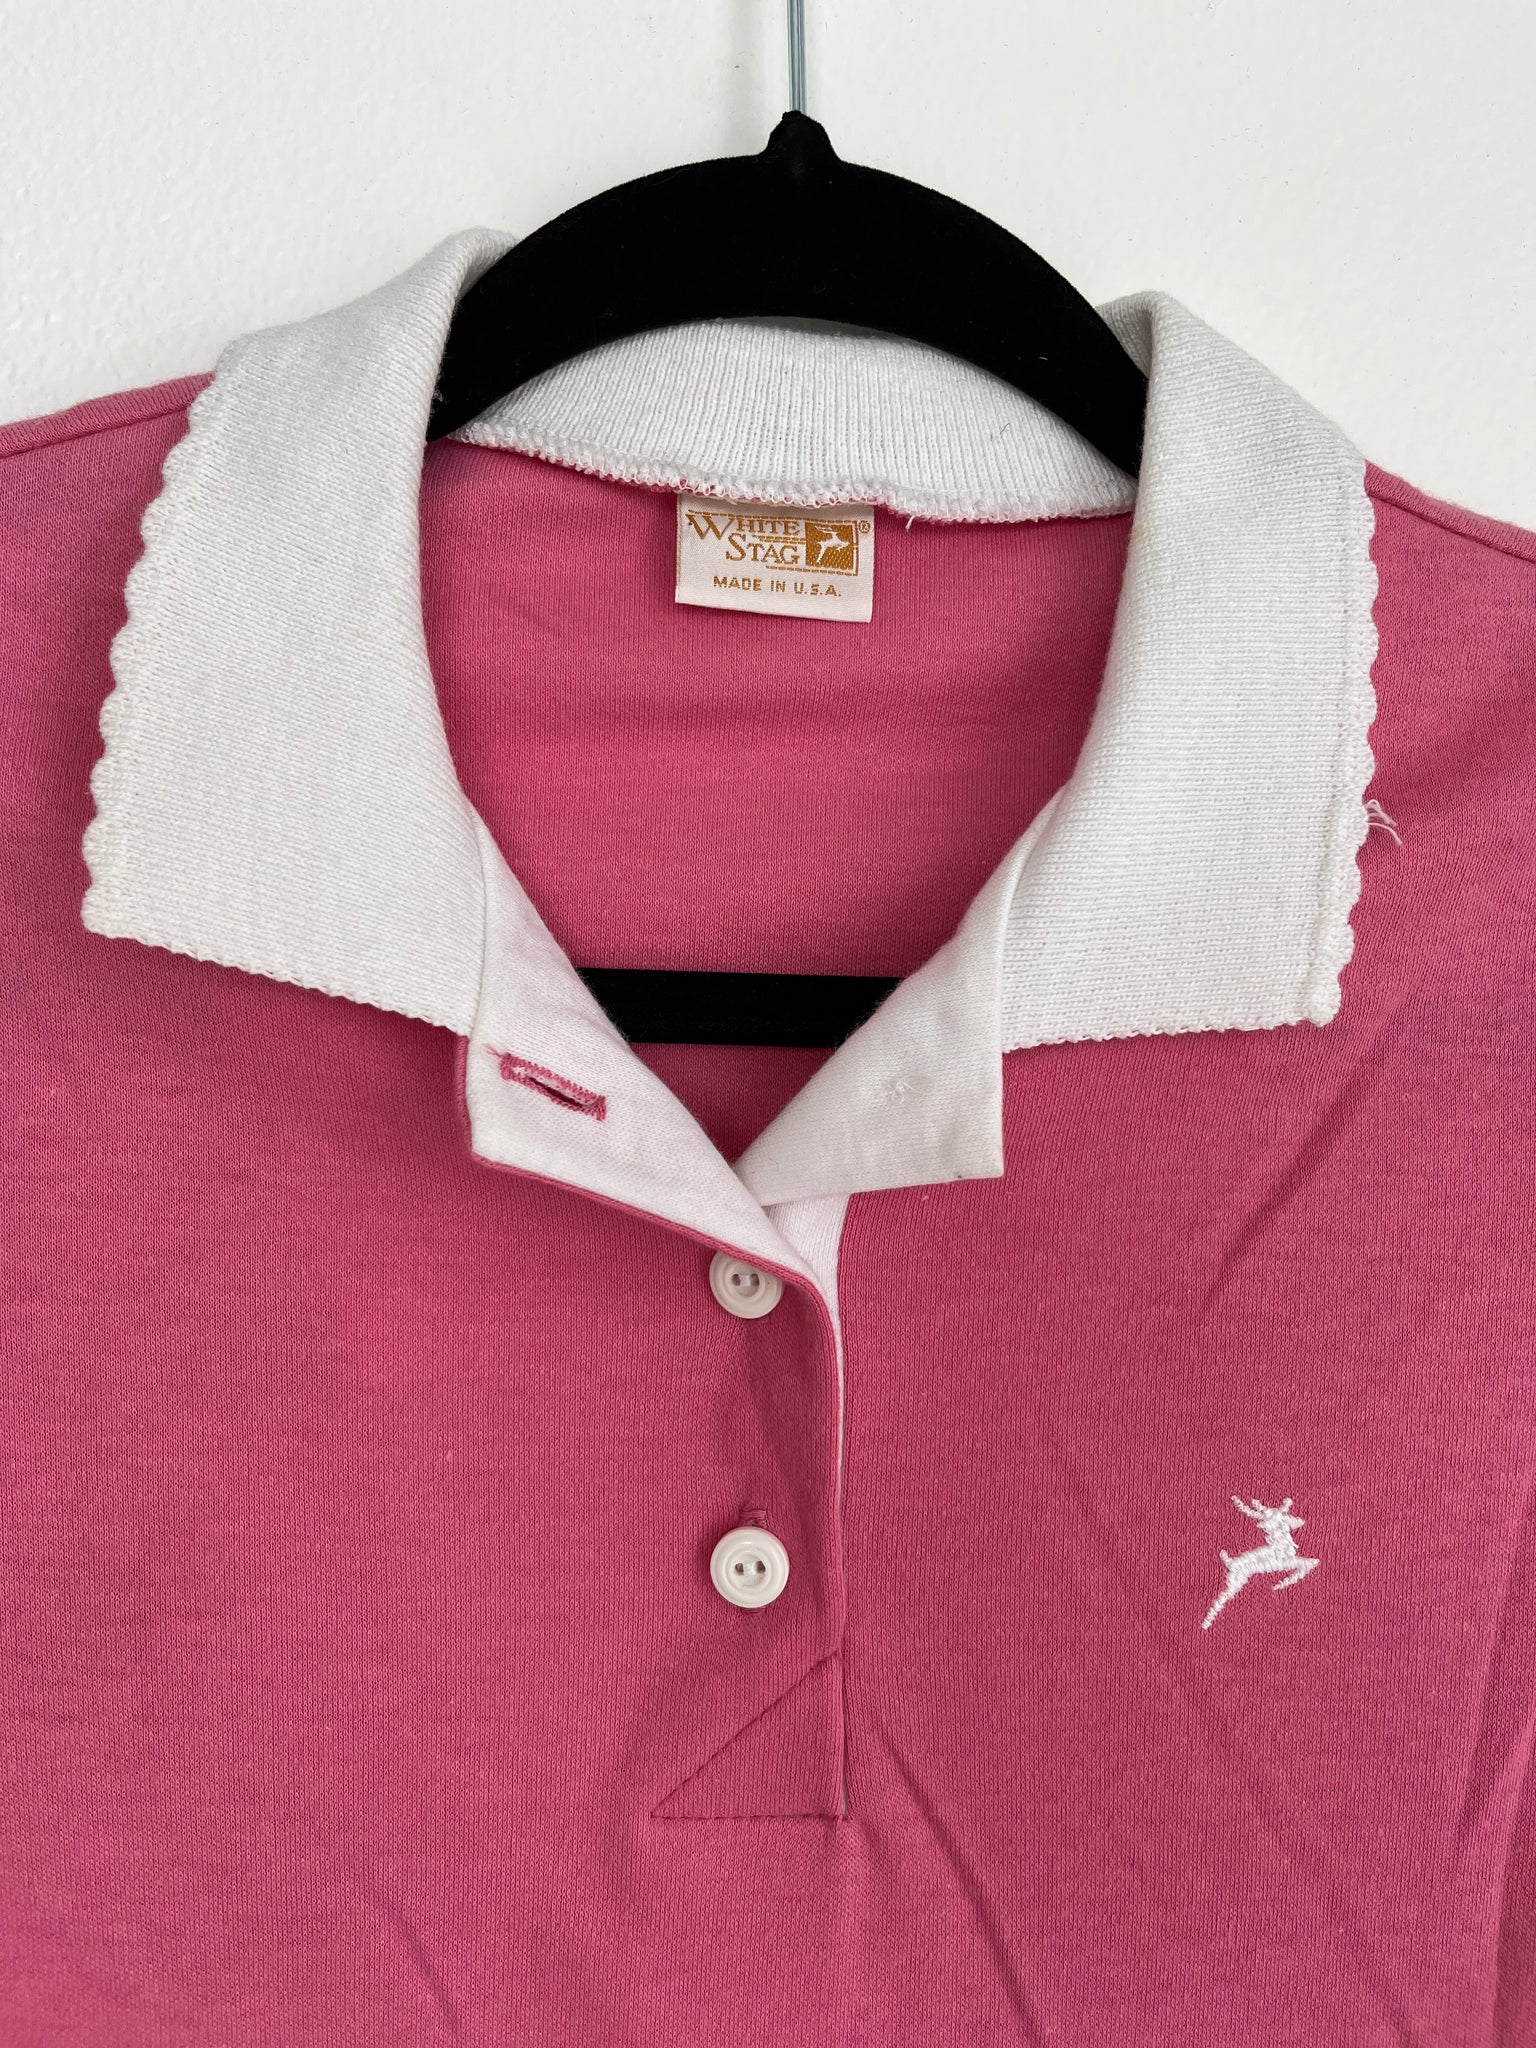 1990s TOP-POLO- White stag pink w/ white collar